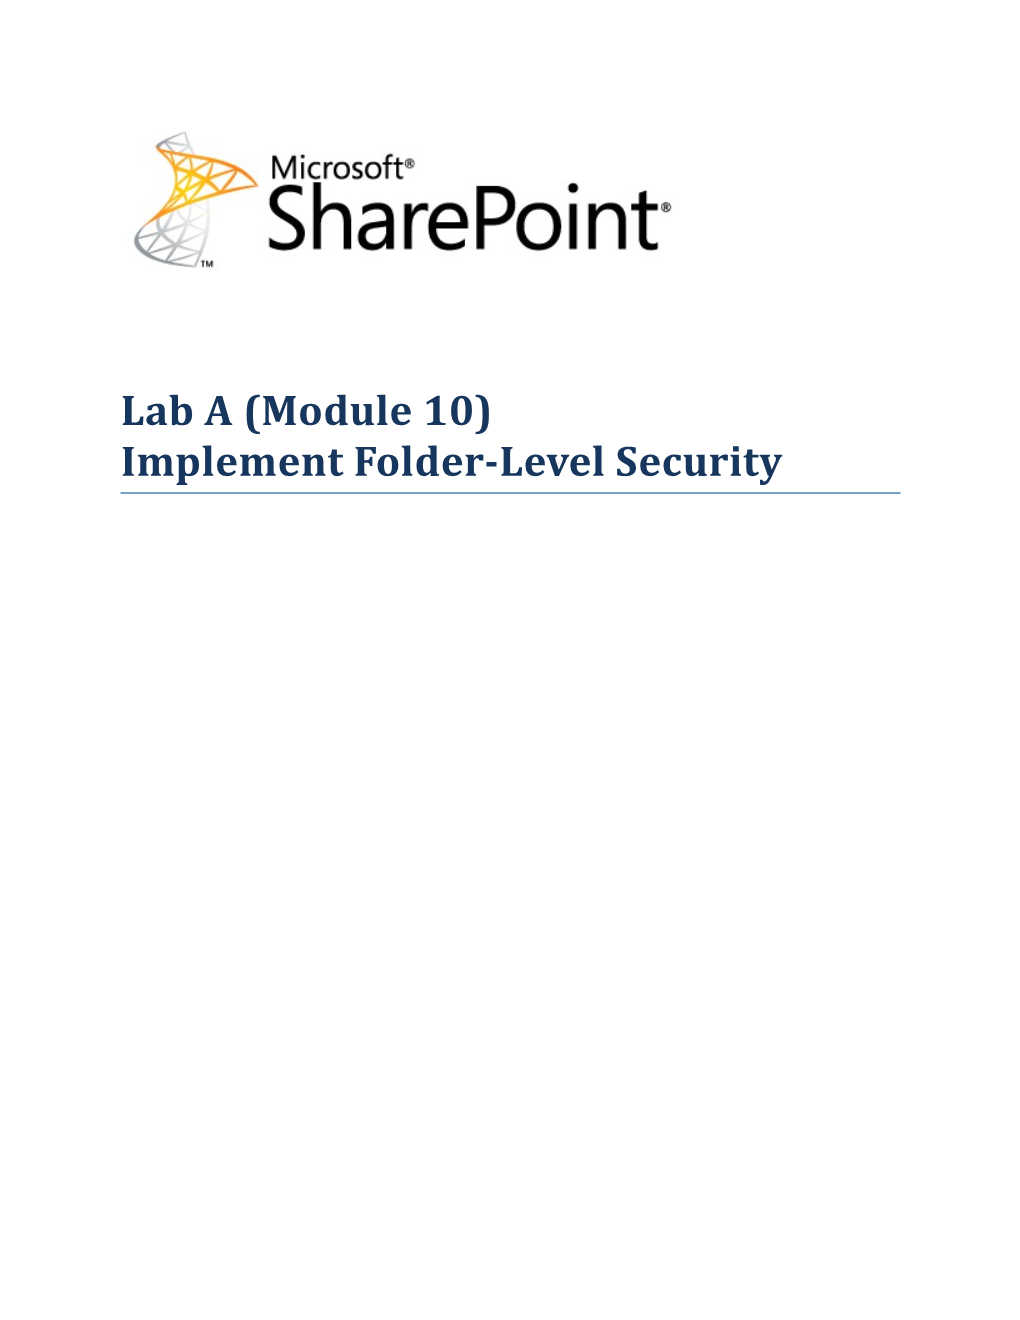 Lab a (Module 10) Implement Folder-Level Security